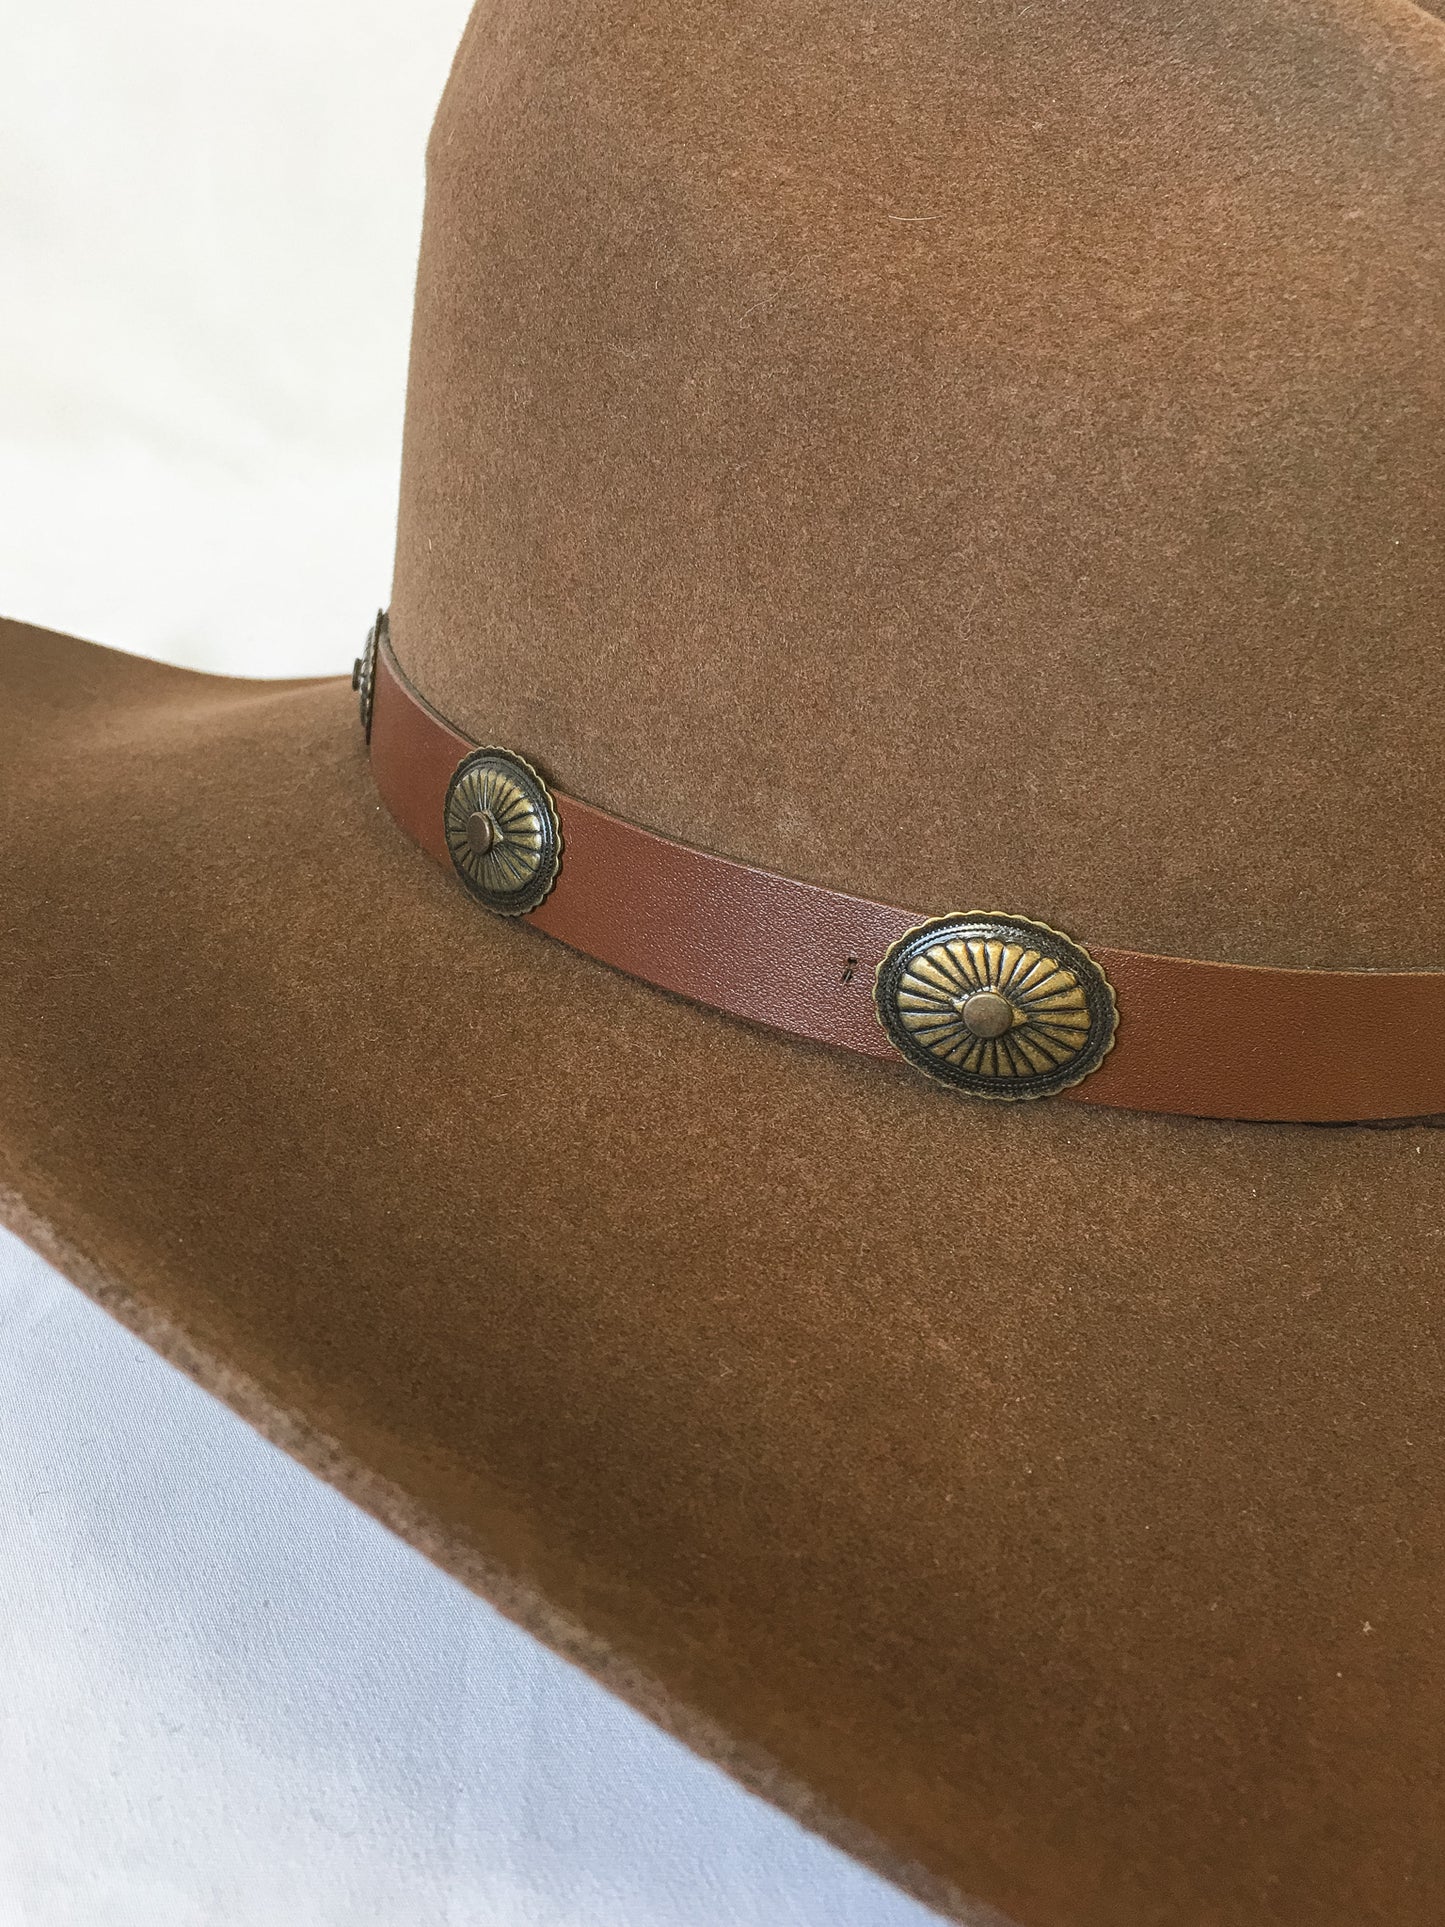 Bailey's Tombstone Brown 2X Wool Blend Cowboy Hat, Sz. 7 5/8